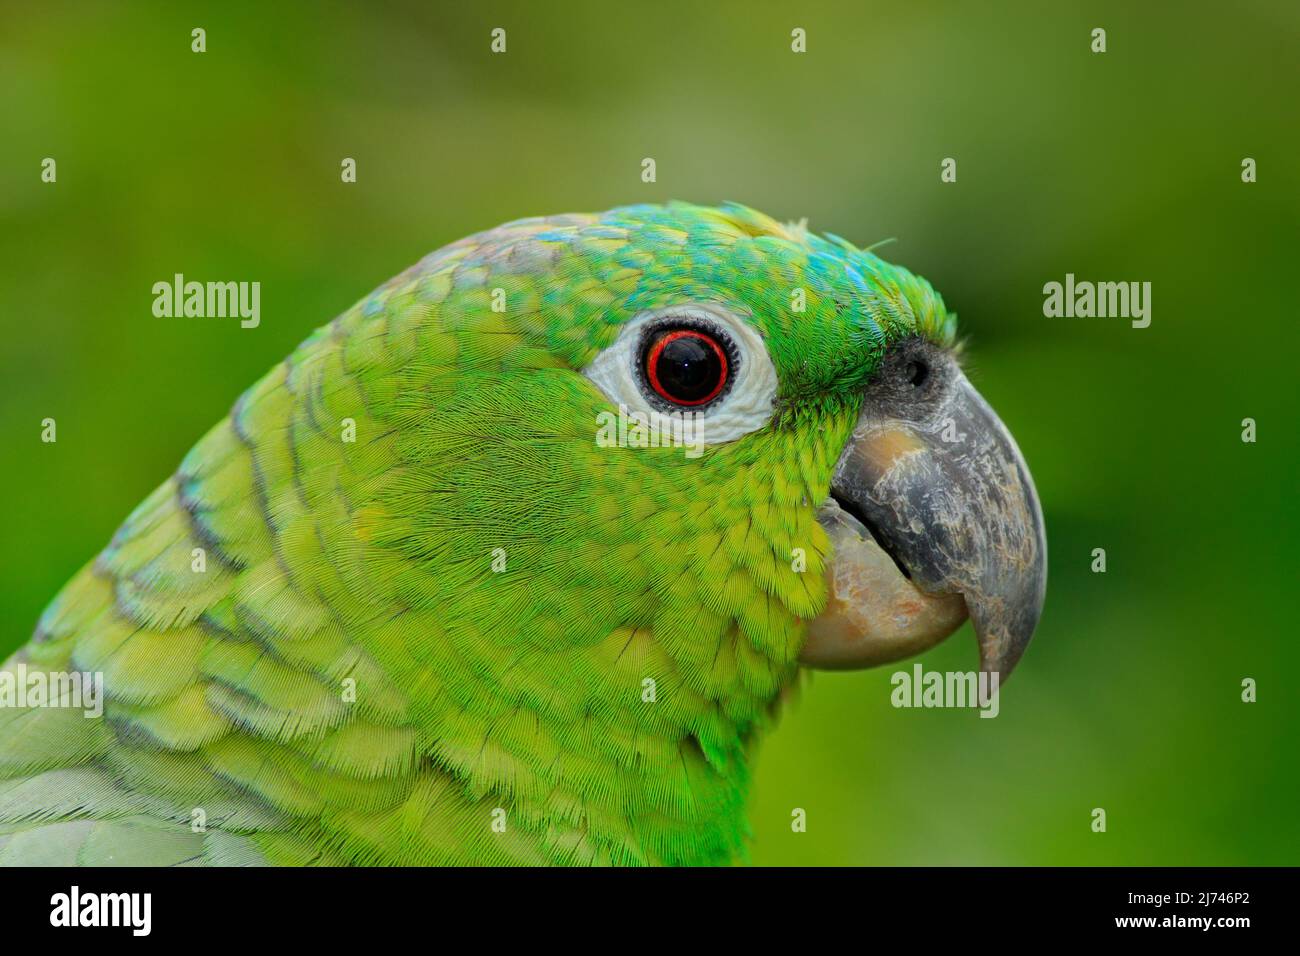 Yellow-crowned Amazon, Amazona ochrocephala auropalliata, portrait of light green parrot, Mexico Stock Photo